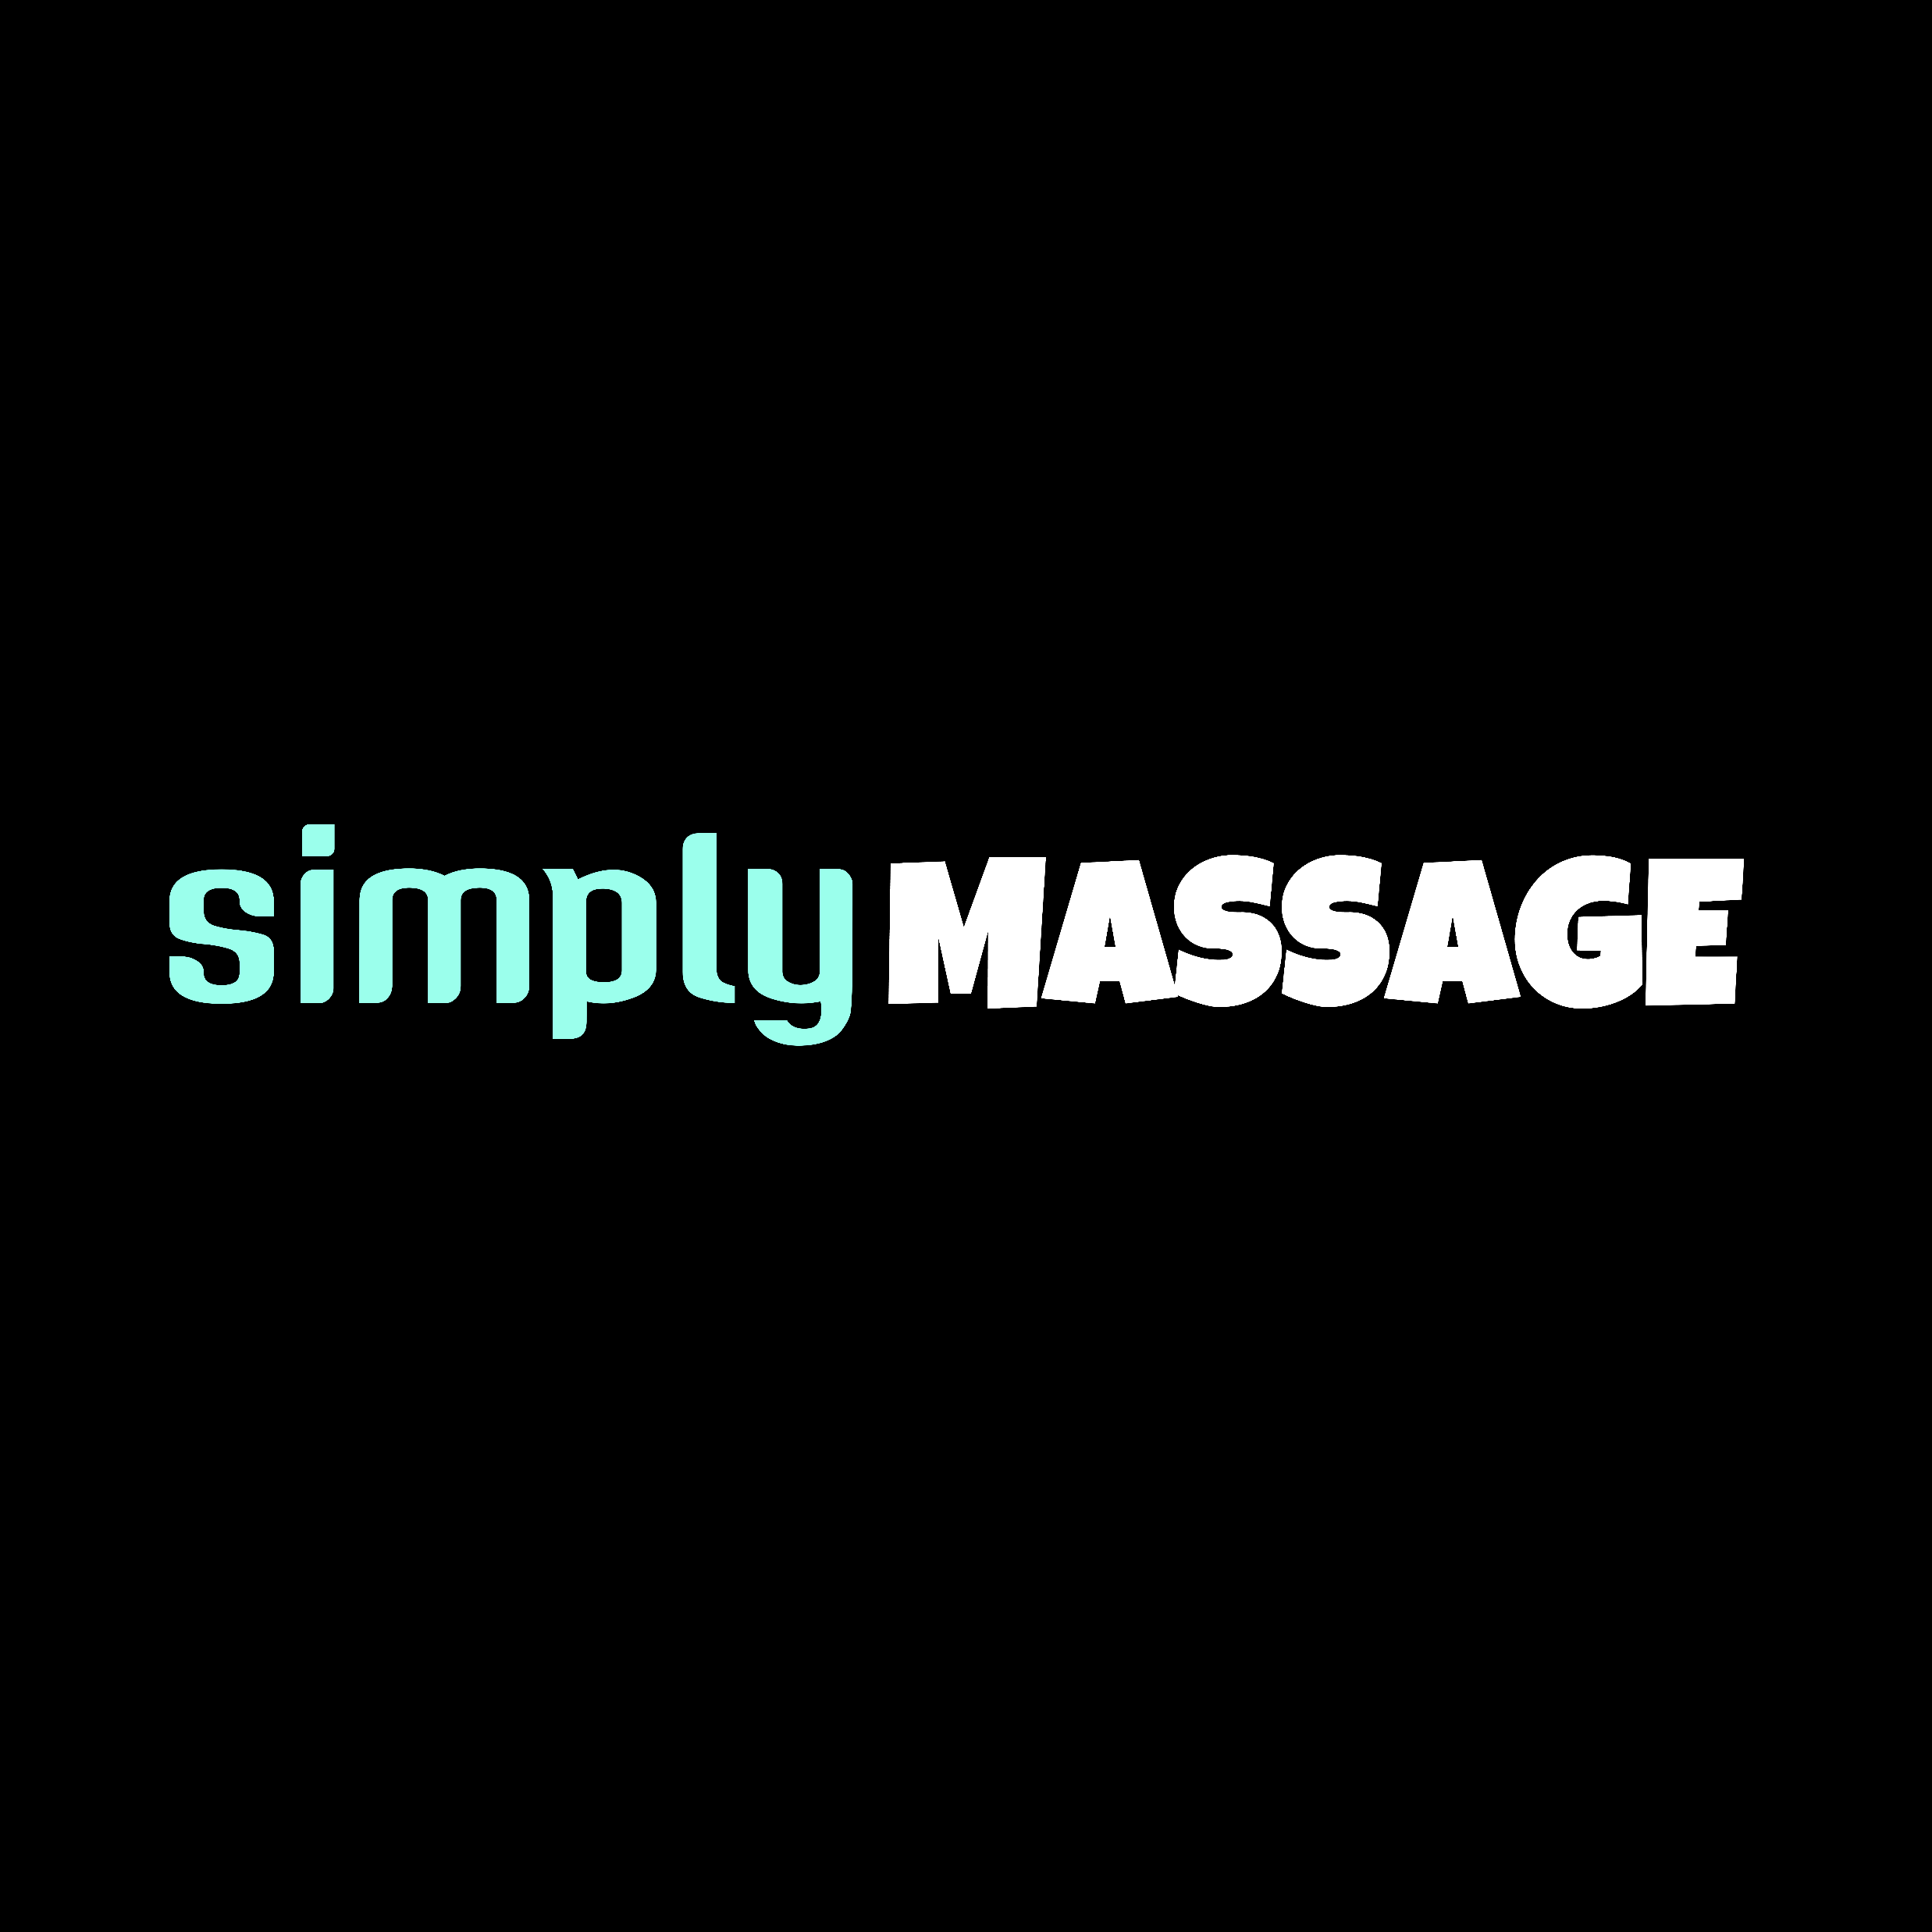 Simply Massage Logo